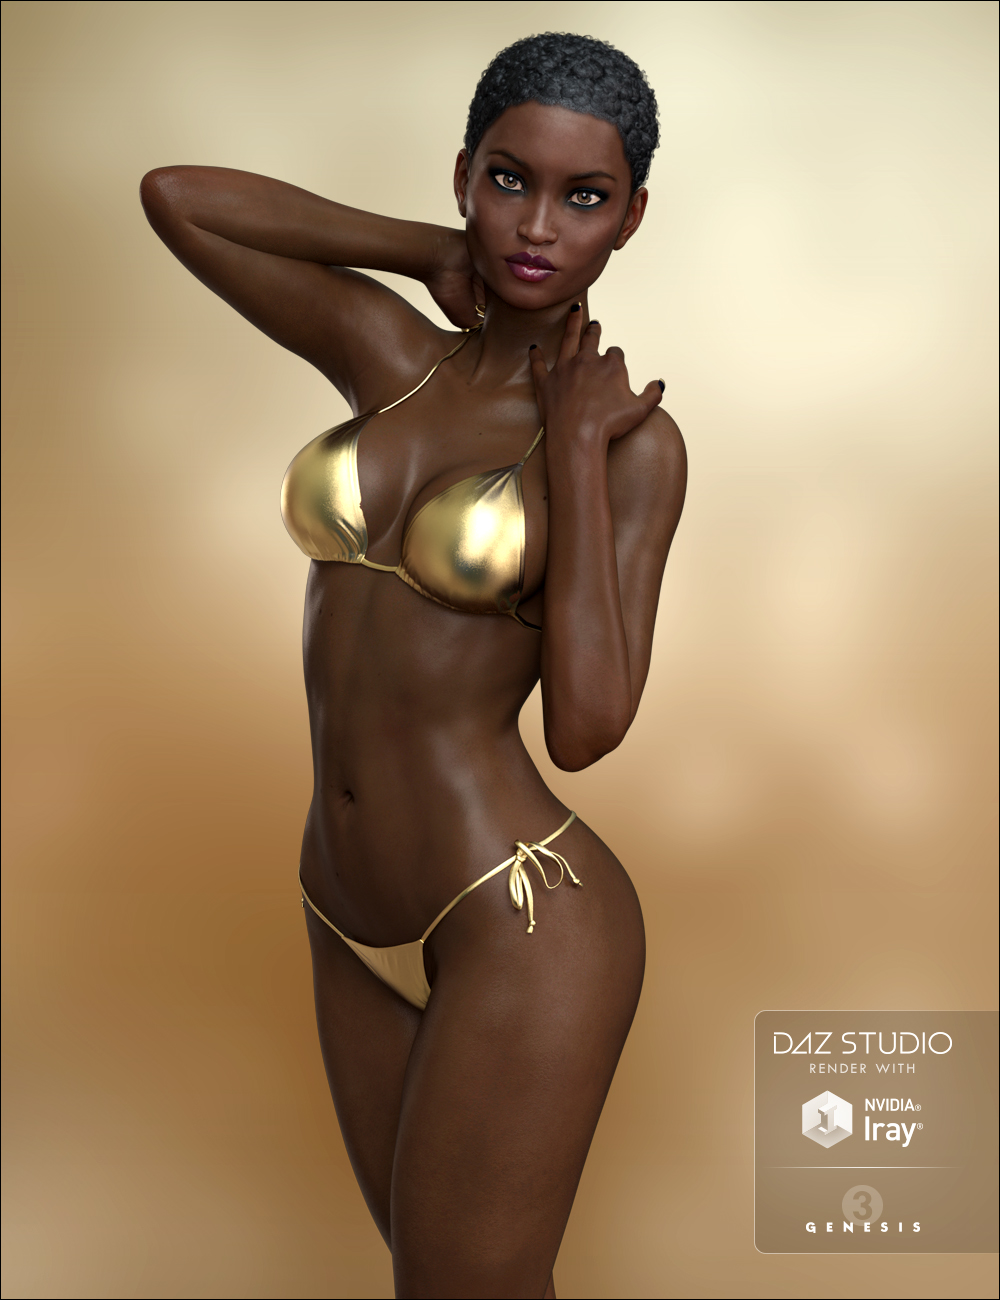 FWSA Samira HD for Victoria 7 by: Fred Winkler ArtSabby, 3D Models by Daz 3D